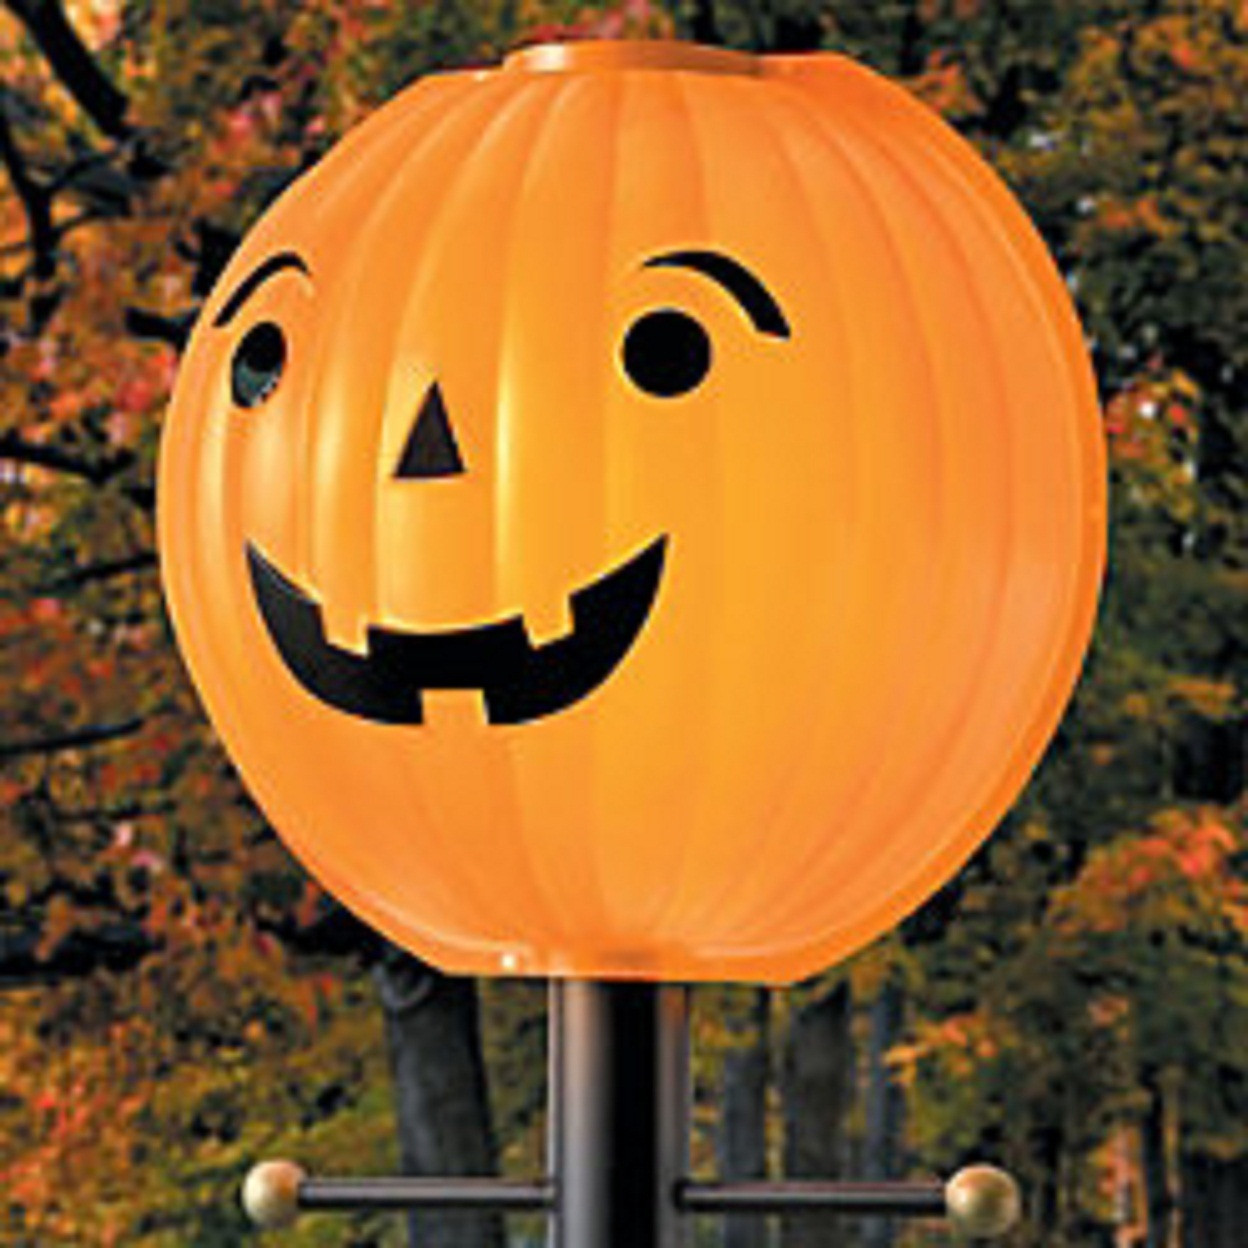 Halloween Lamp Shade Covers
 HALLOWEEN THANKSGIVING PUMPKIN JACK O LANTERN LAMPPOST